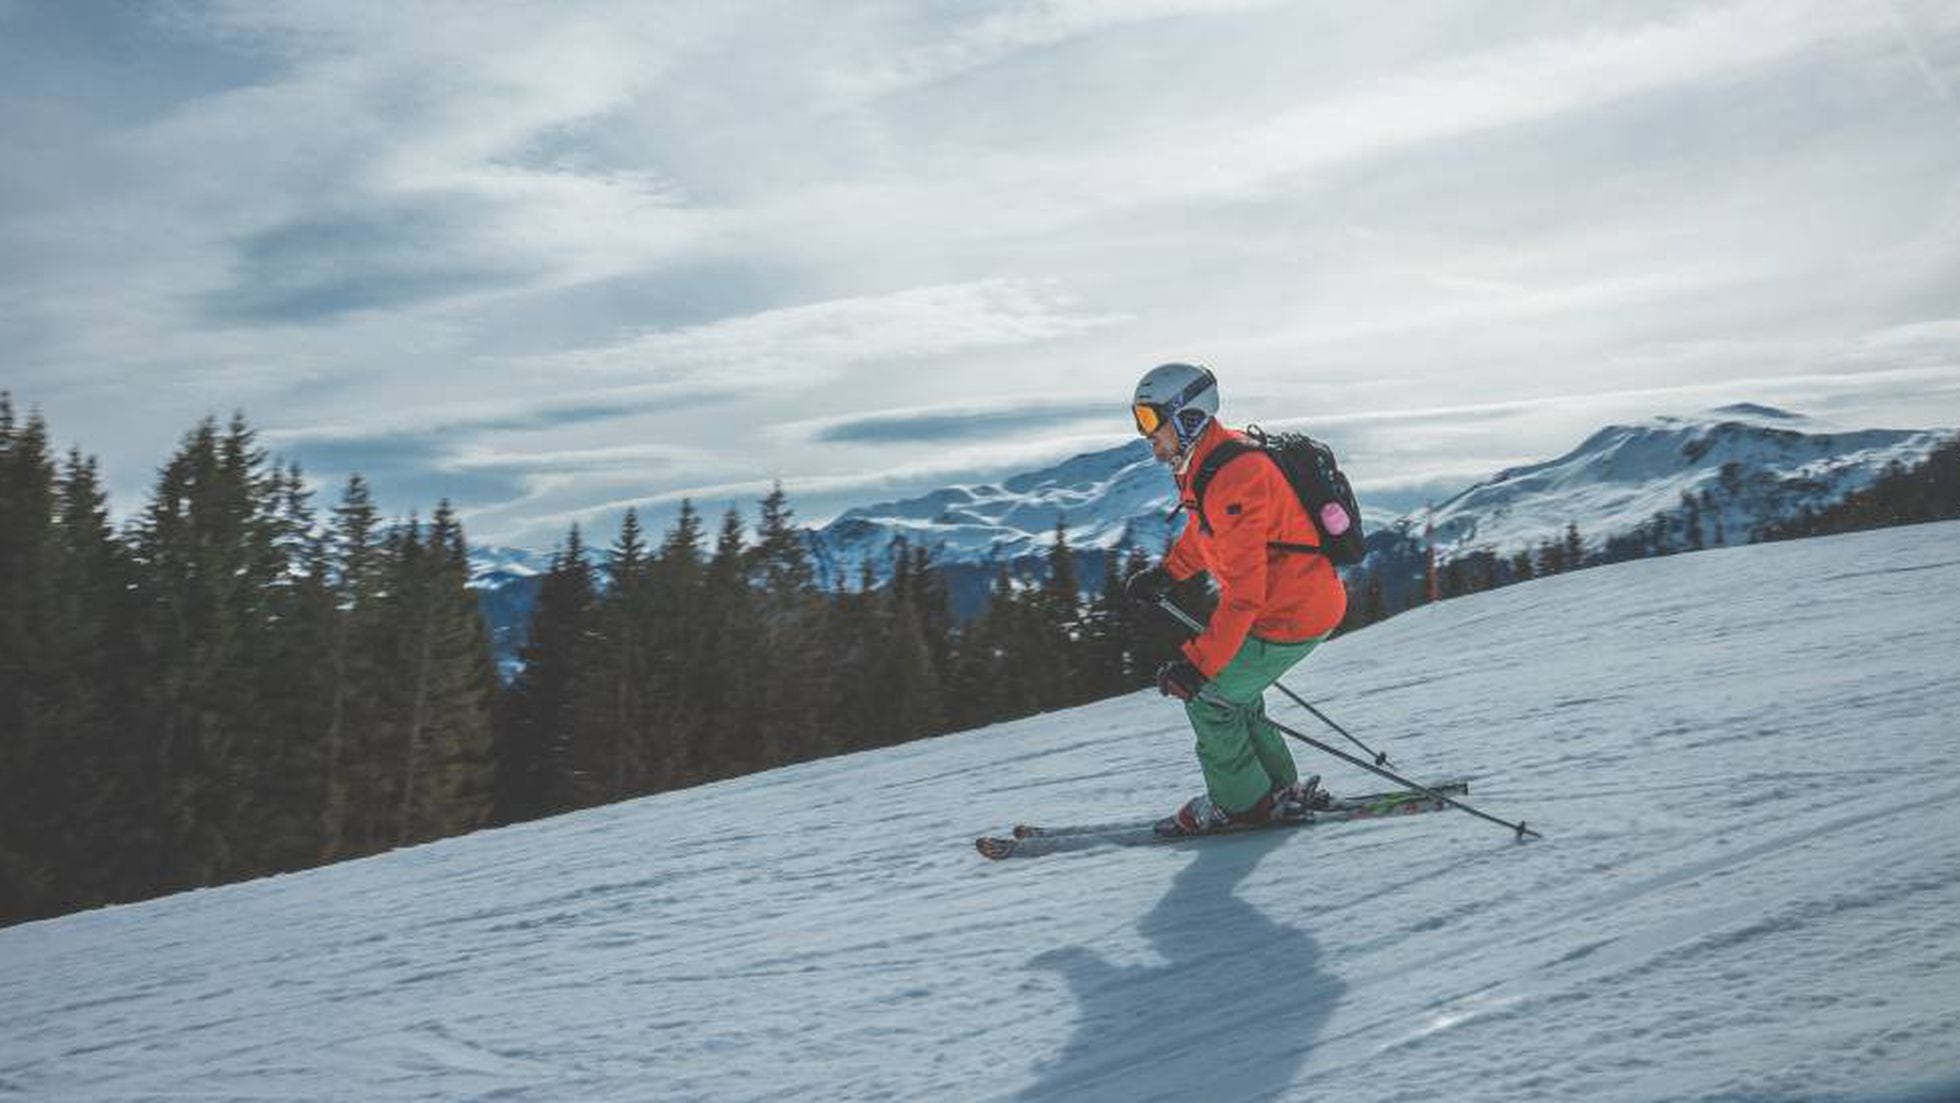 G Ropa Climatizada Para Esquiar Carga A Través De Abrigo Tér 